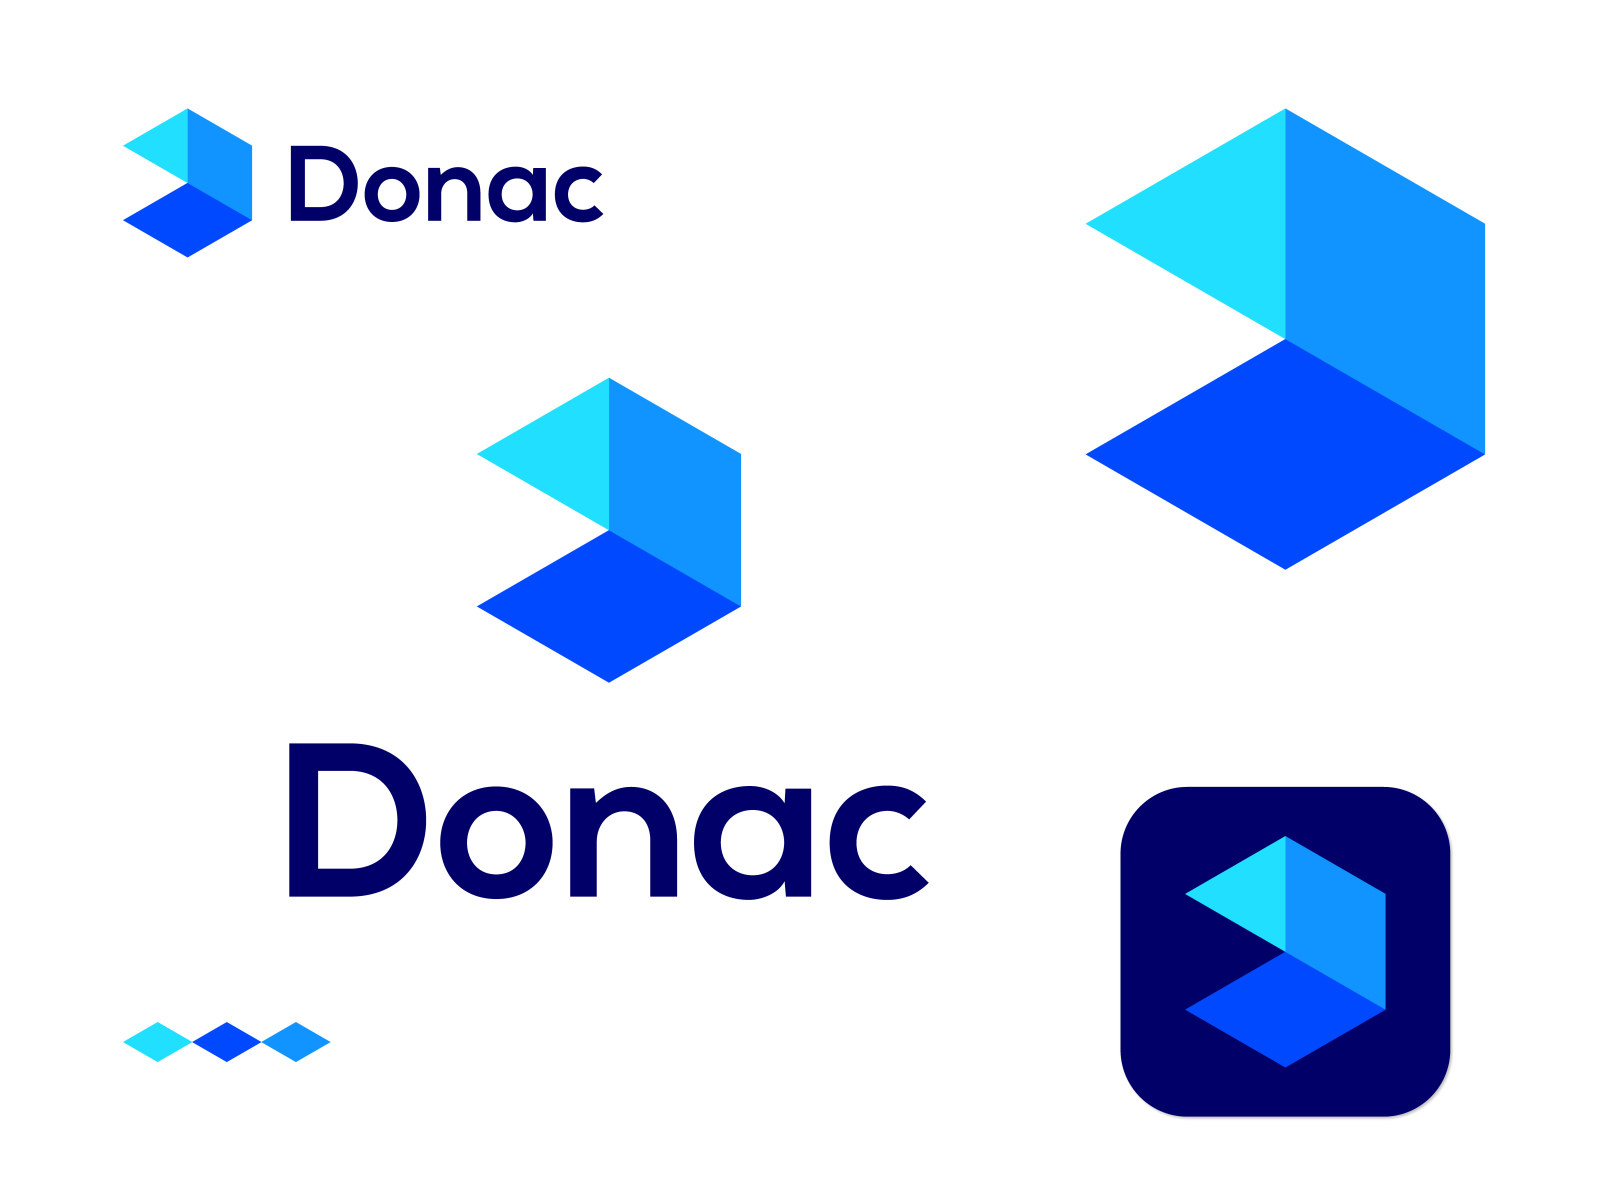 D Letter Logo - Donac Logo by MD Abdul Alim on Dribbble